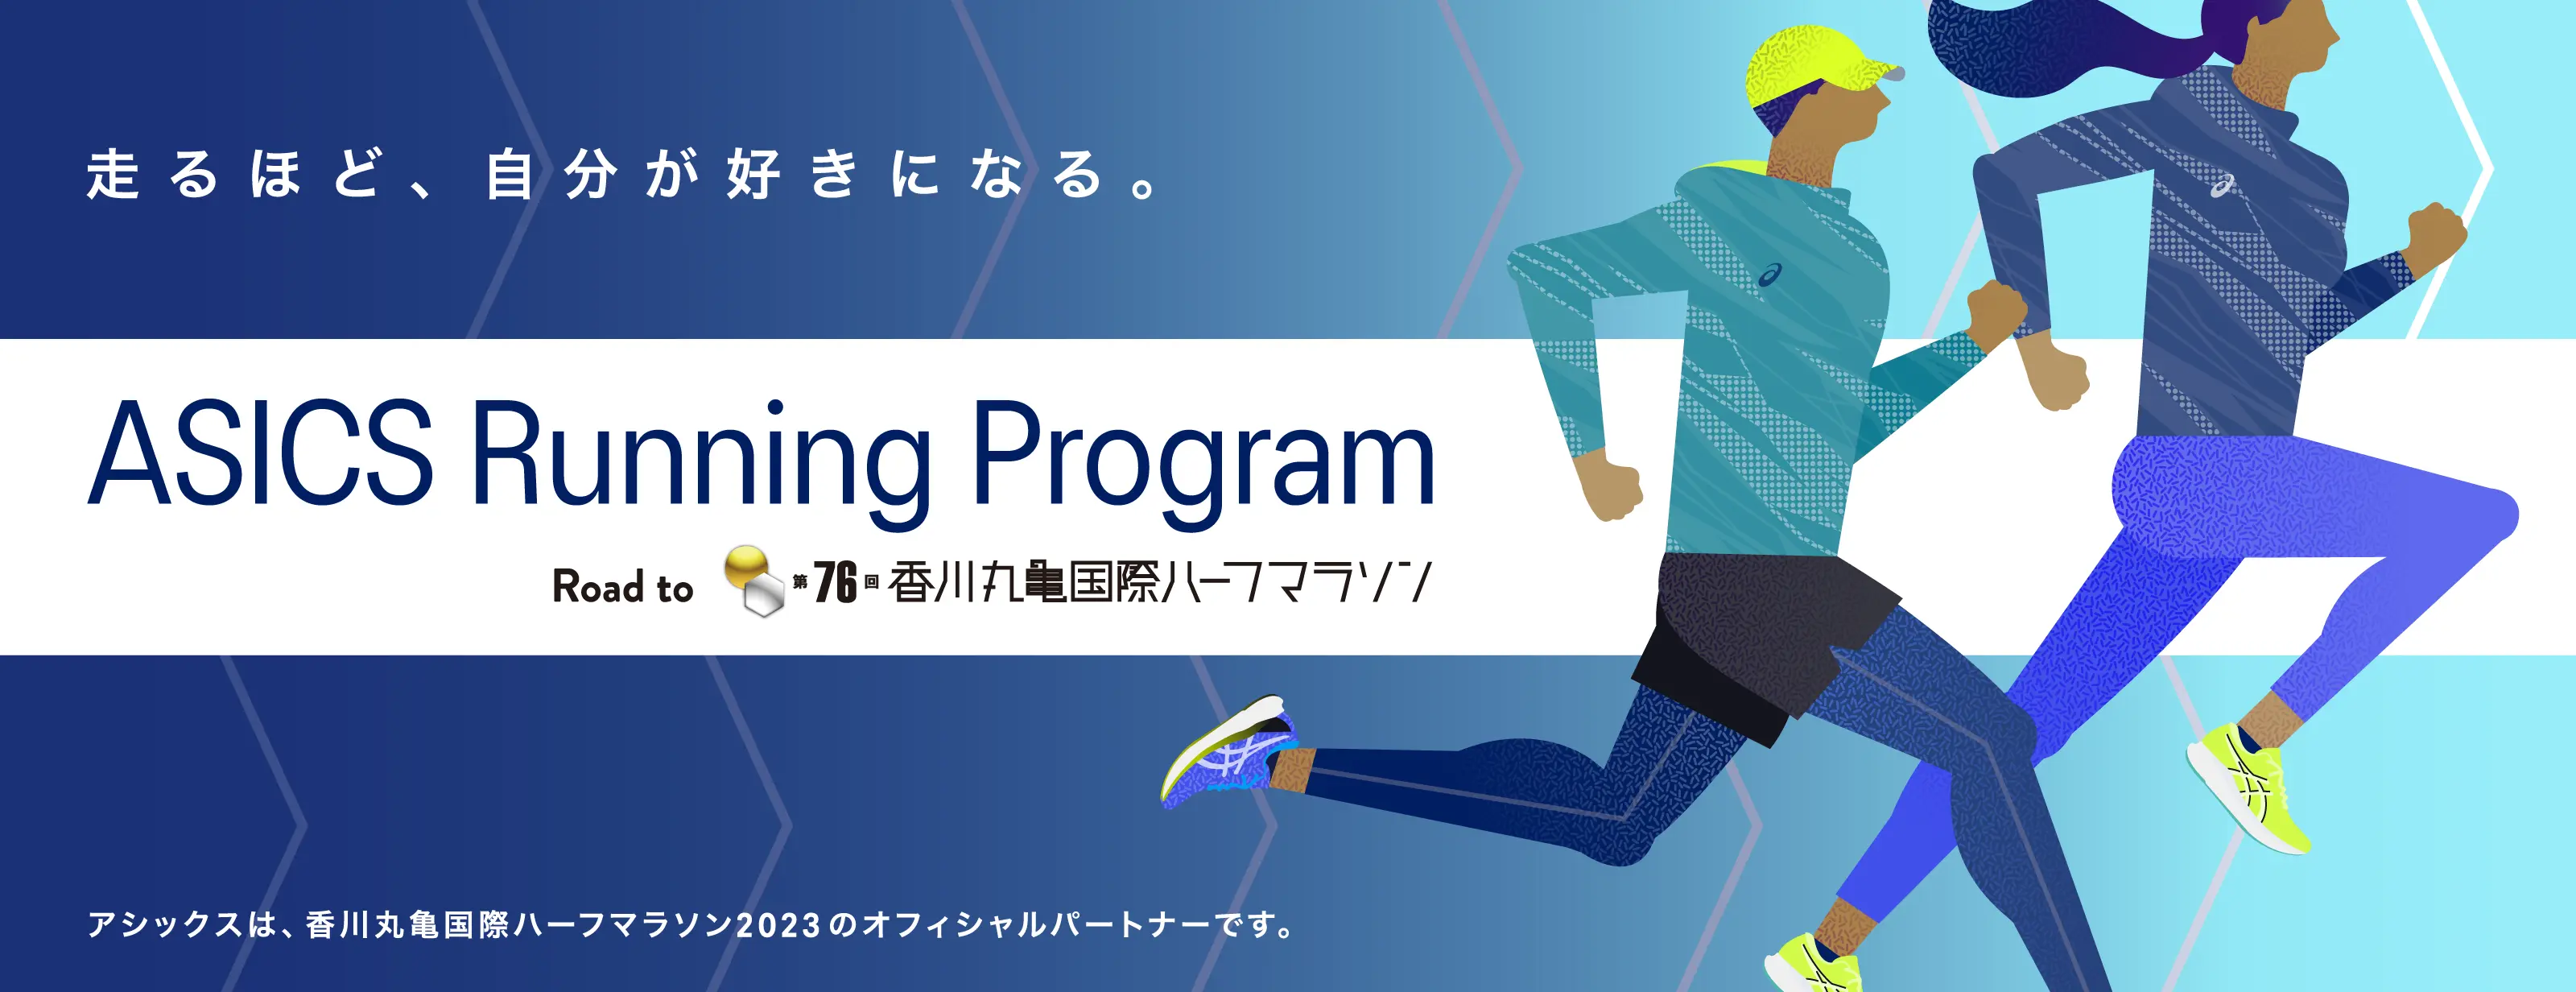 ASICS Running Program Road to 香川丸亀国際ハーフマラソン